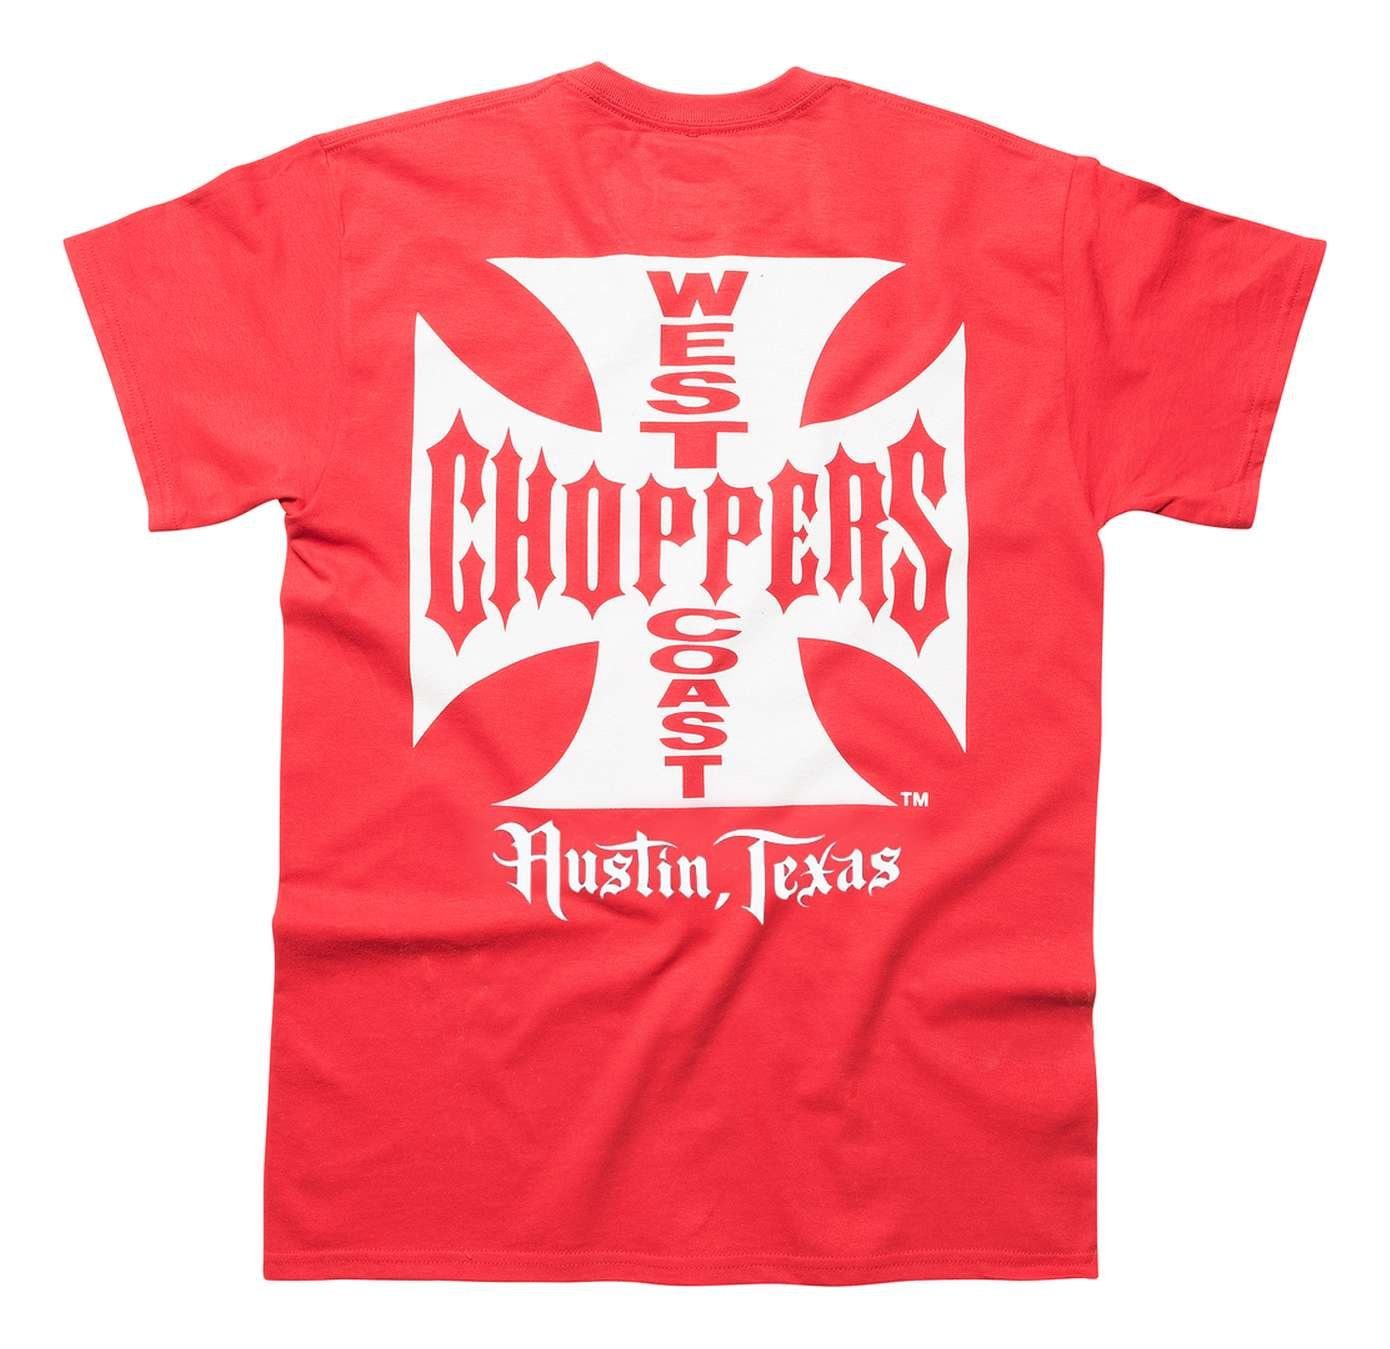 WCC Cross Coast West OG Austin/Texas Choppers T-Shirt